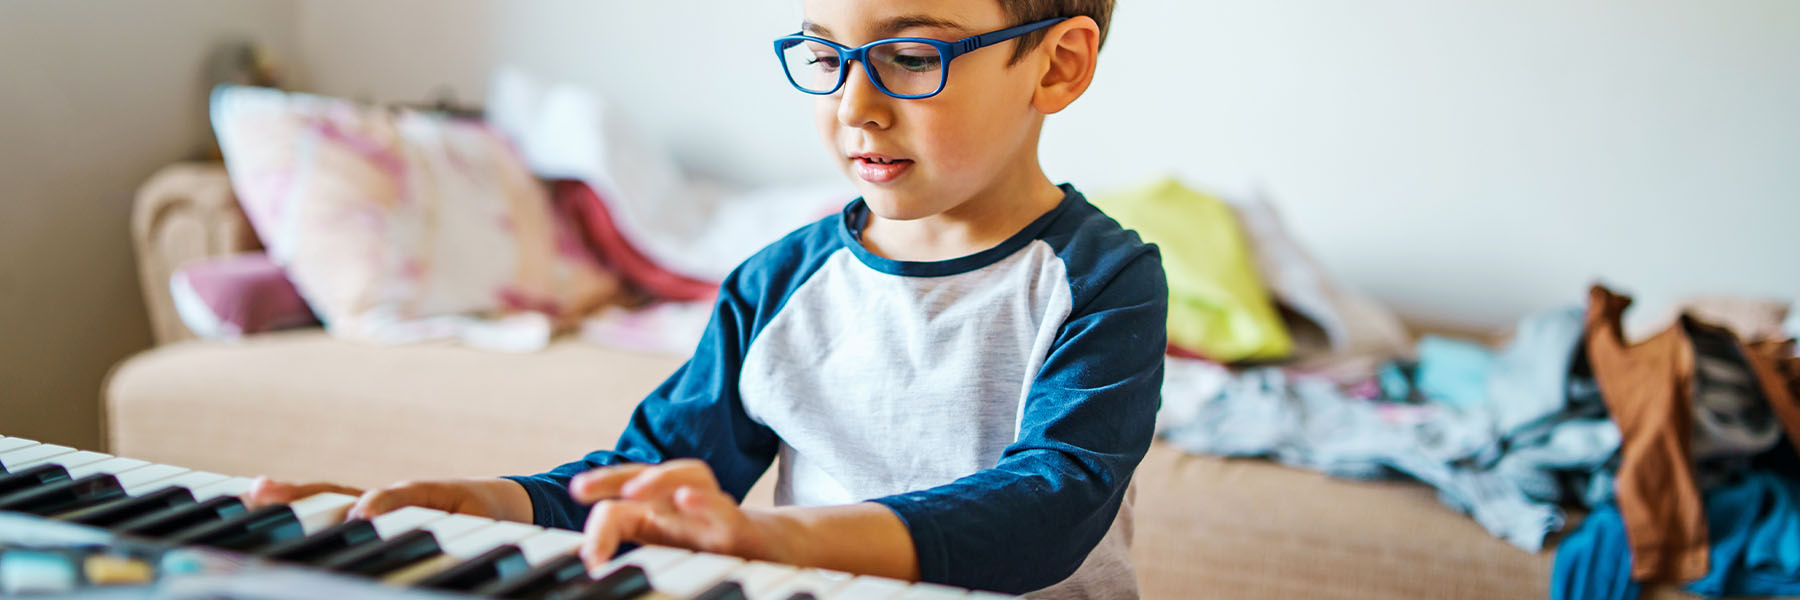 A child playing on a keyboard